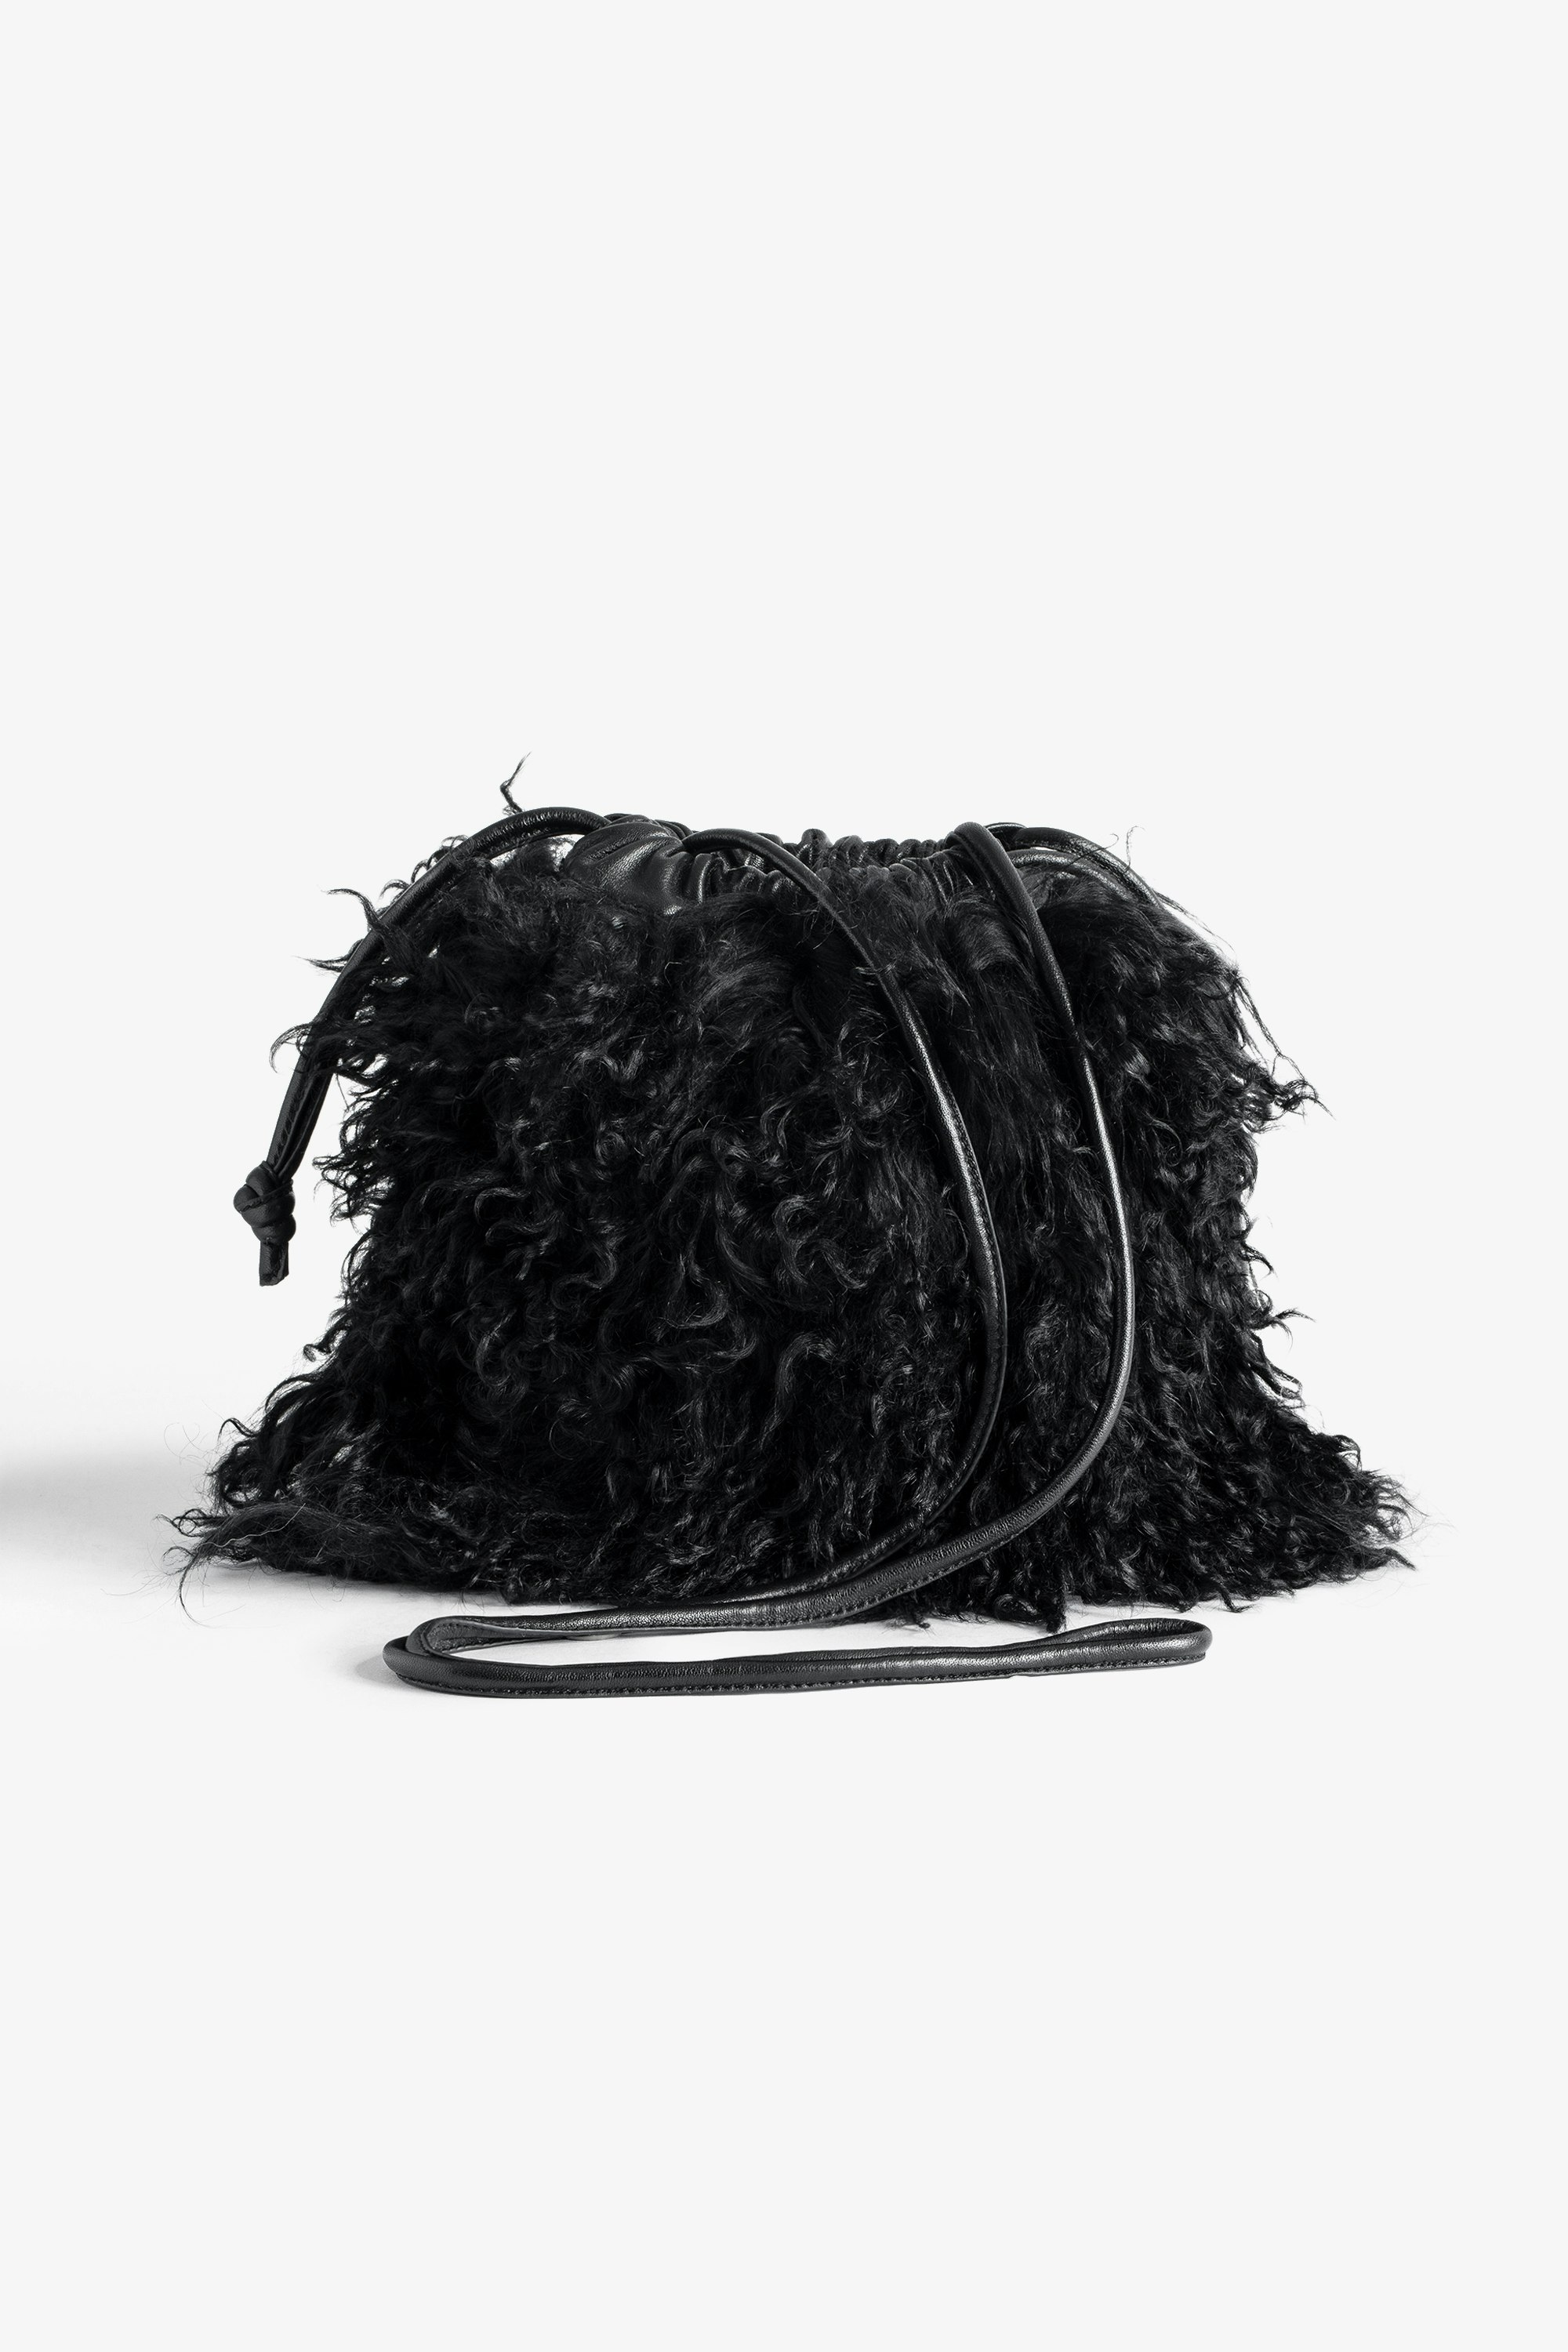 Sac Rock To Go Frenzy Shearling - Petit sac seau en cuir noir shearling à cordon et bandoulière.